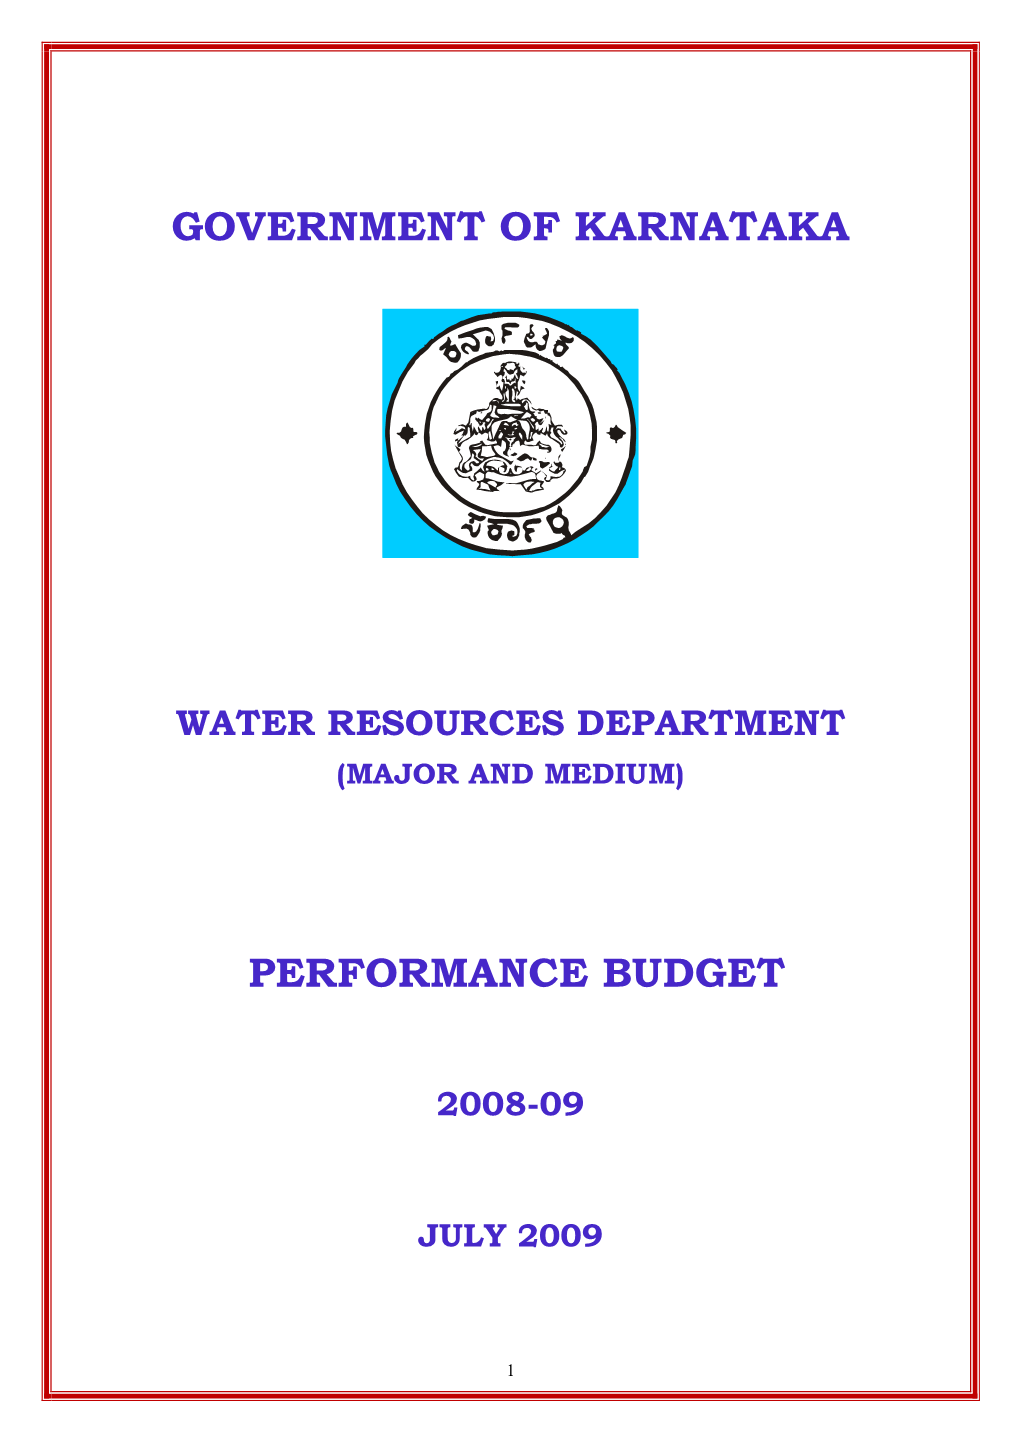 Government of Karnataka Performance Budget